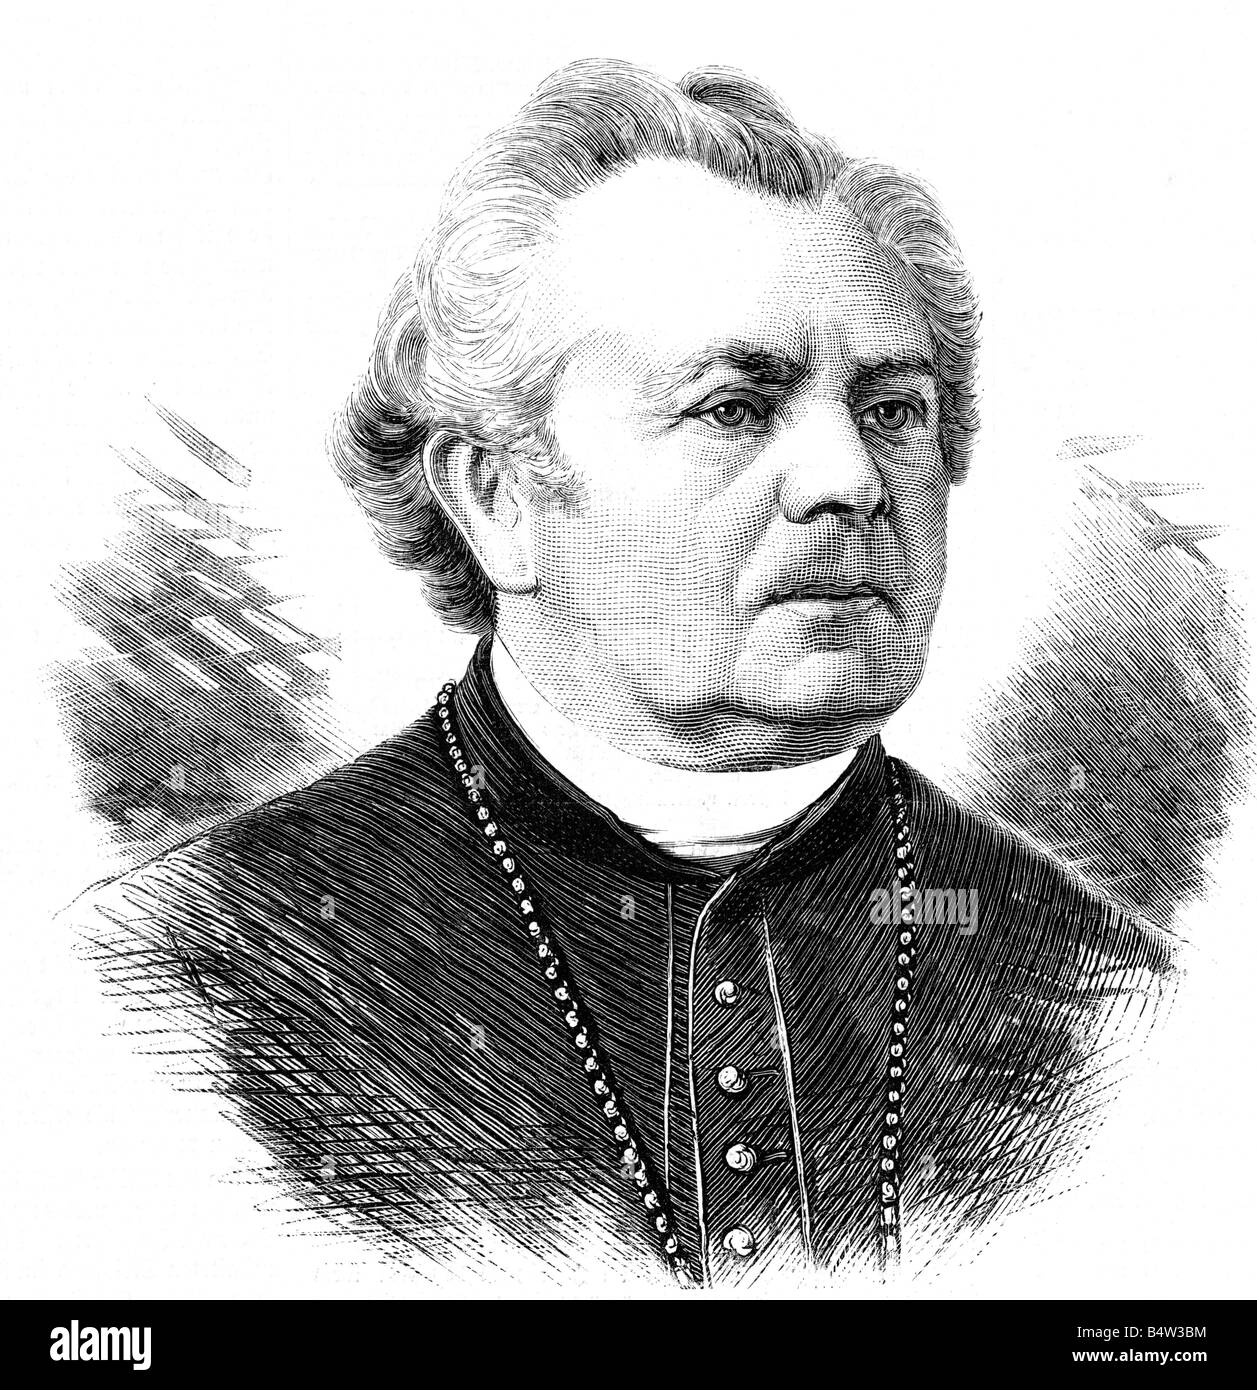 Foerster, Heinrich, 24.11.1799 - 20.10.1881, bishop of Breslau, portrait, wood engraving, Stock Photo